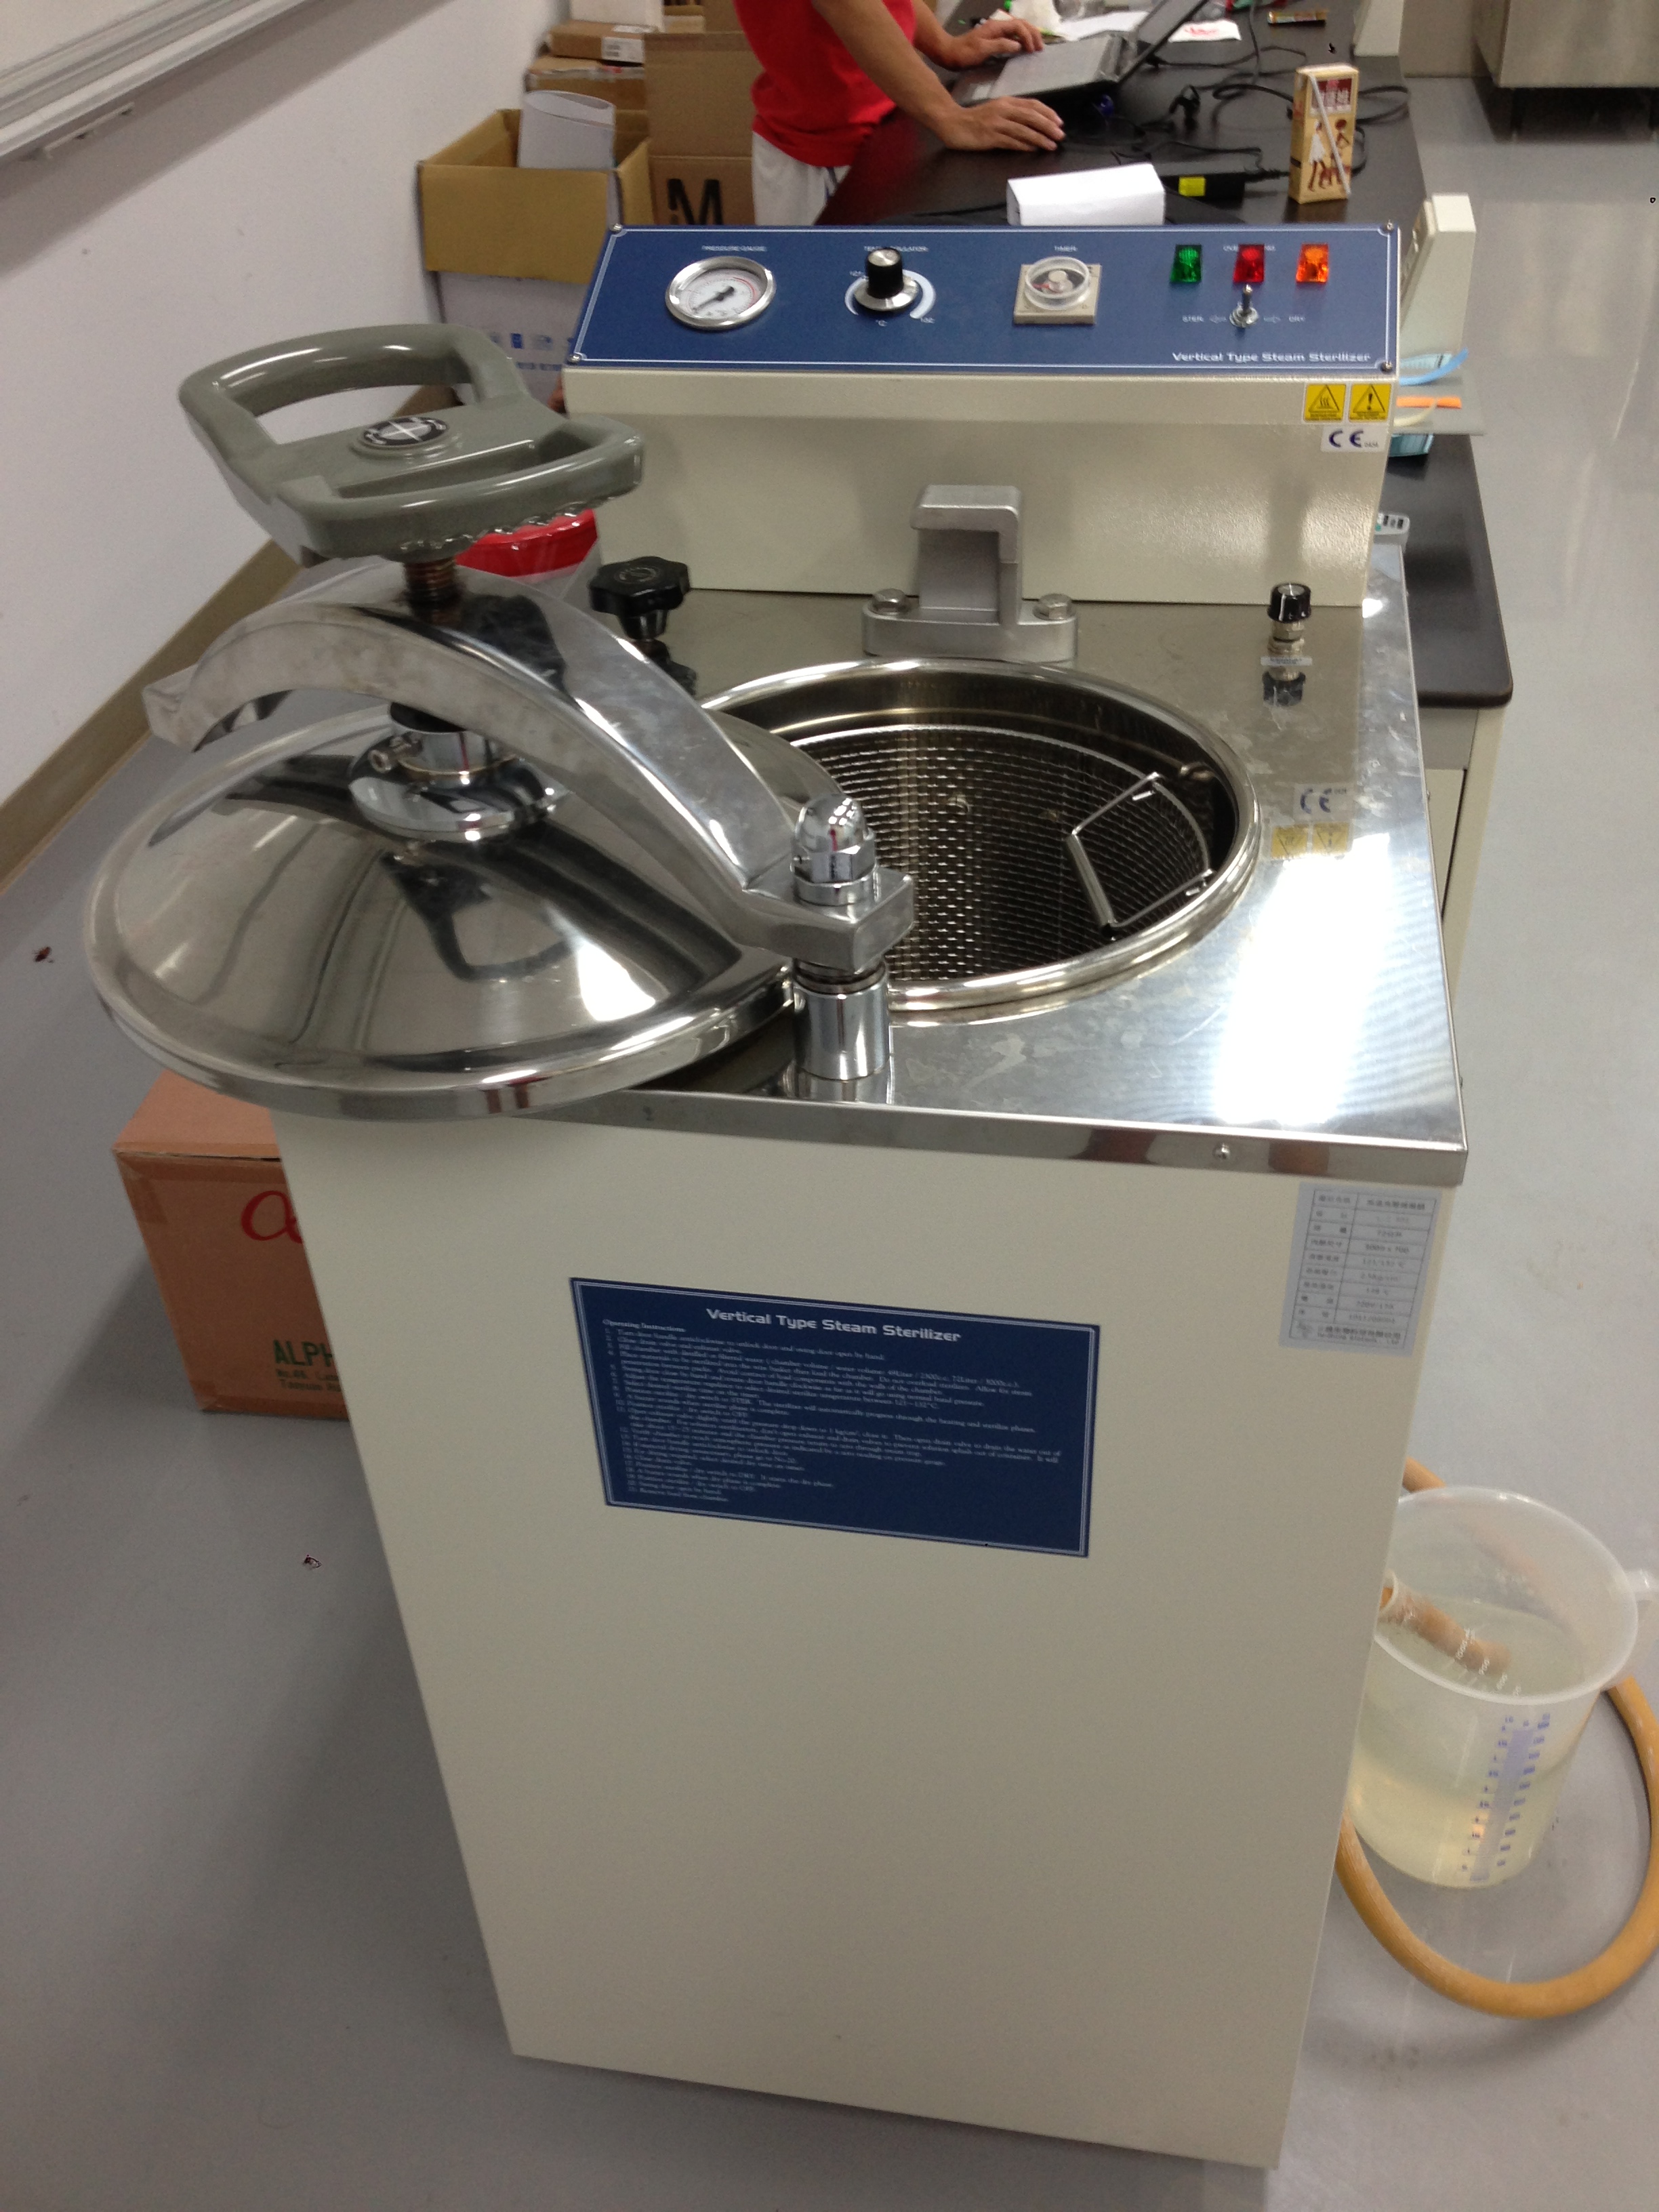 Figure 2. Sterilizer - All wastes are sterilized before disposal.